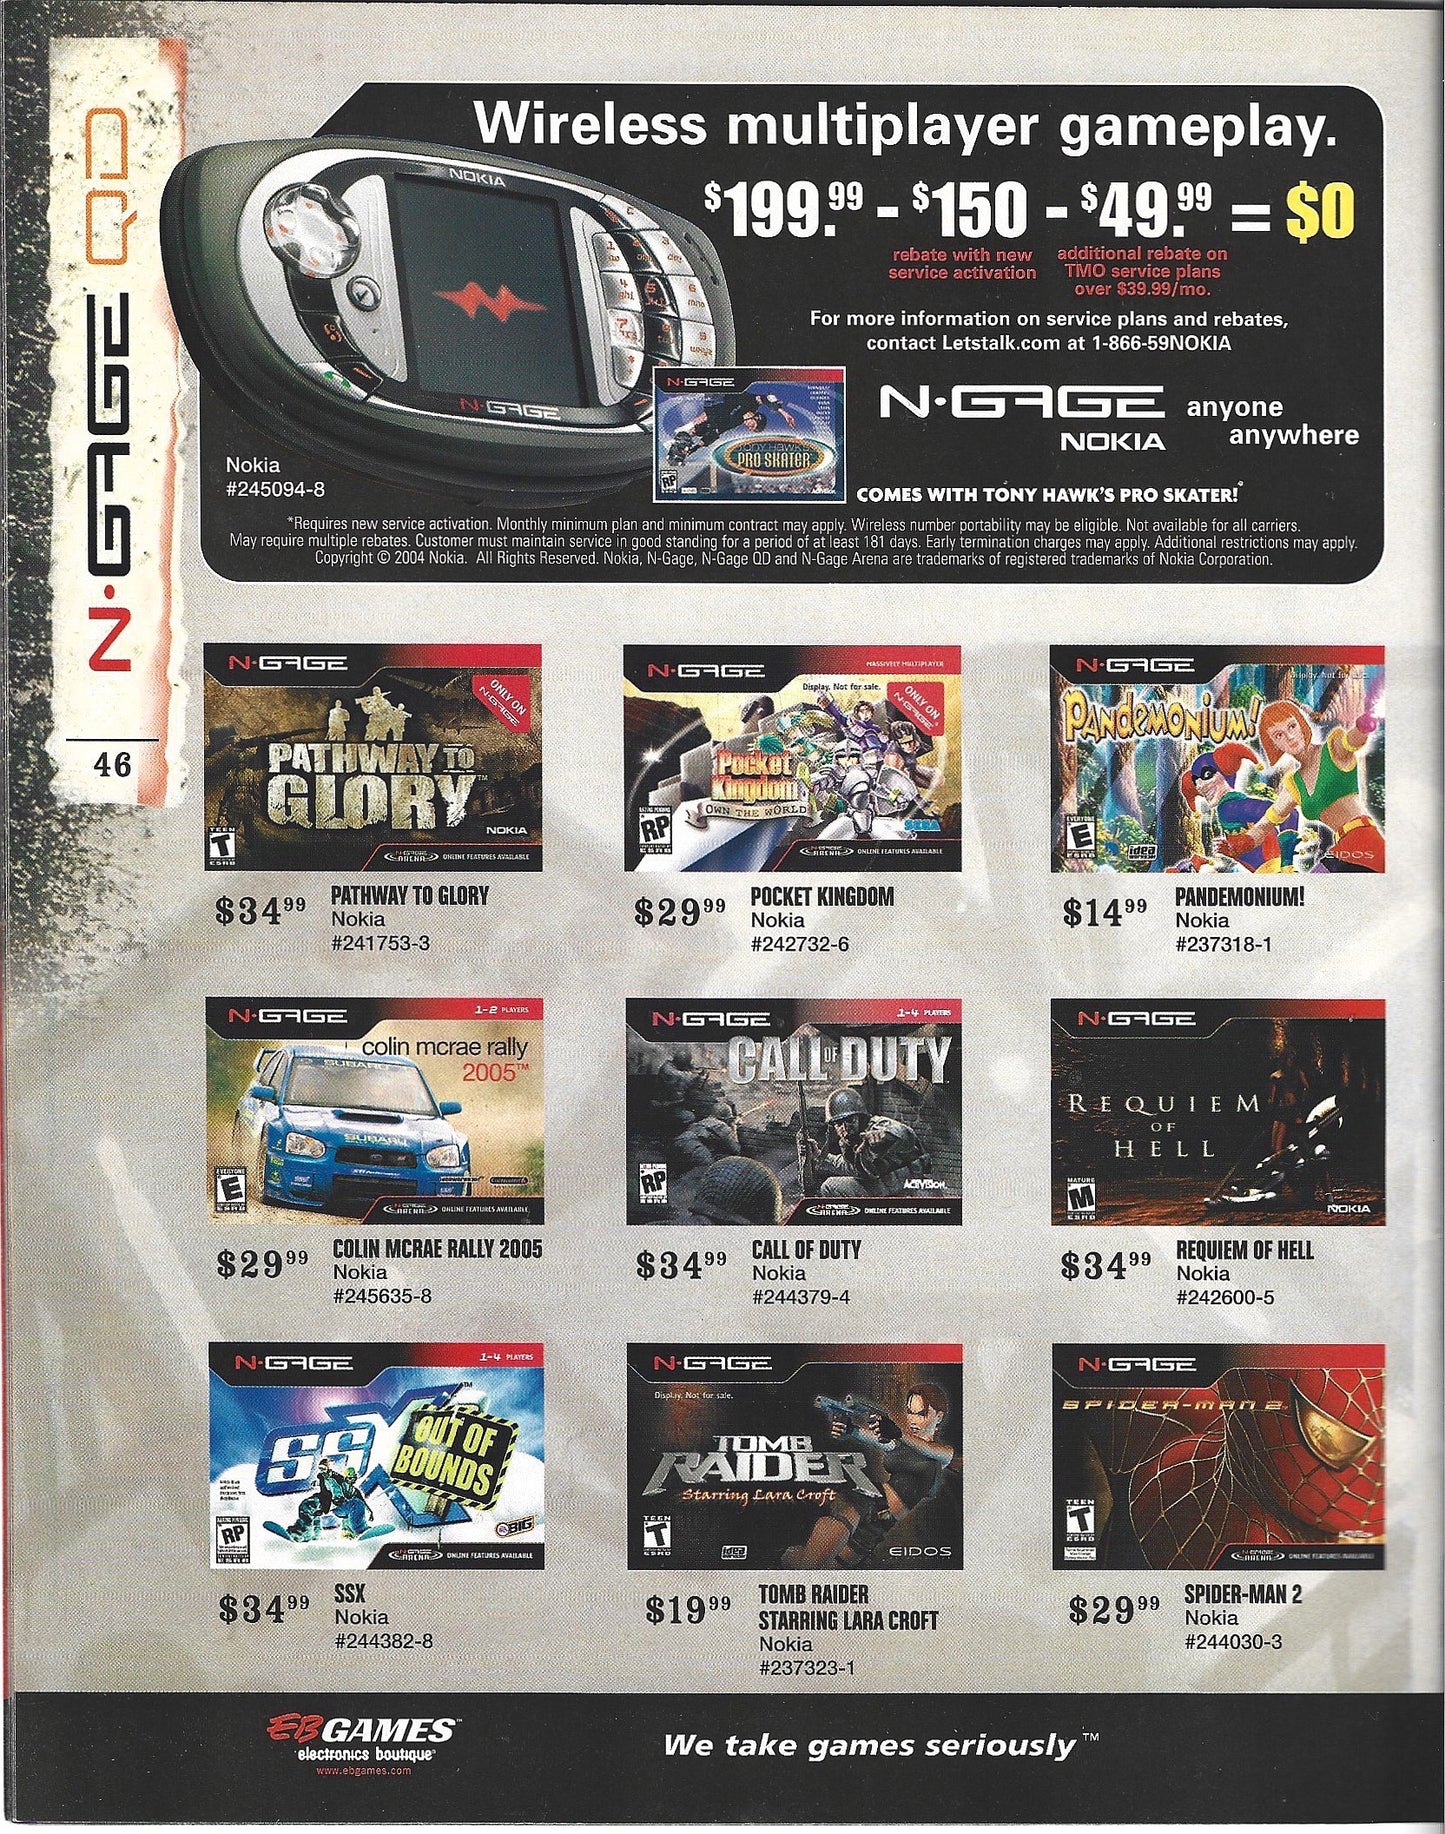 EB Games Catalog (January 2005)